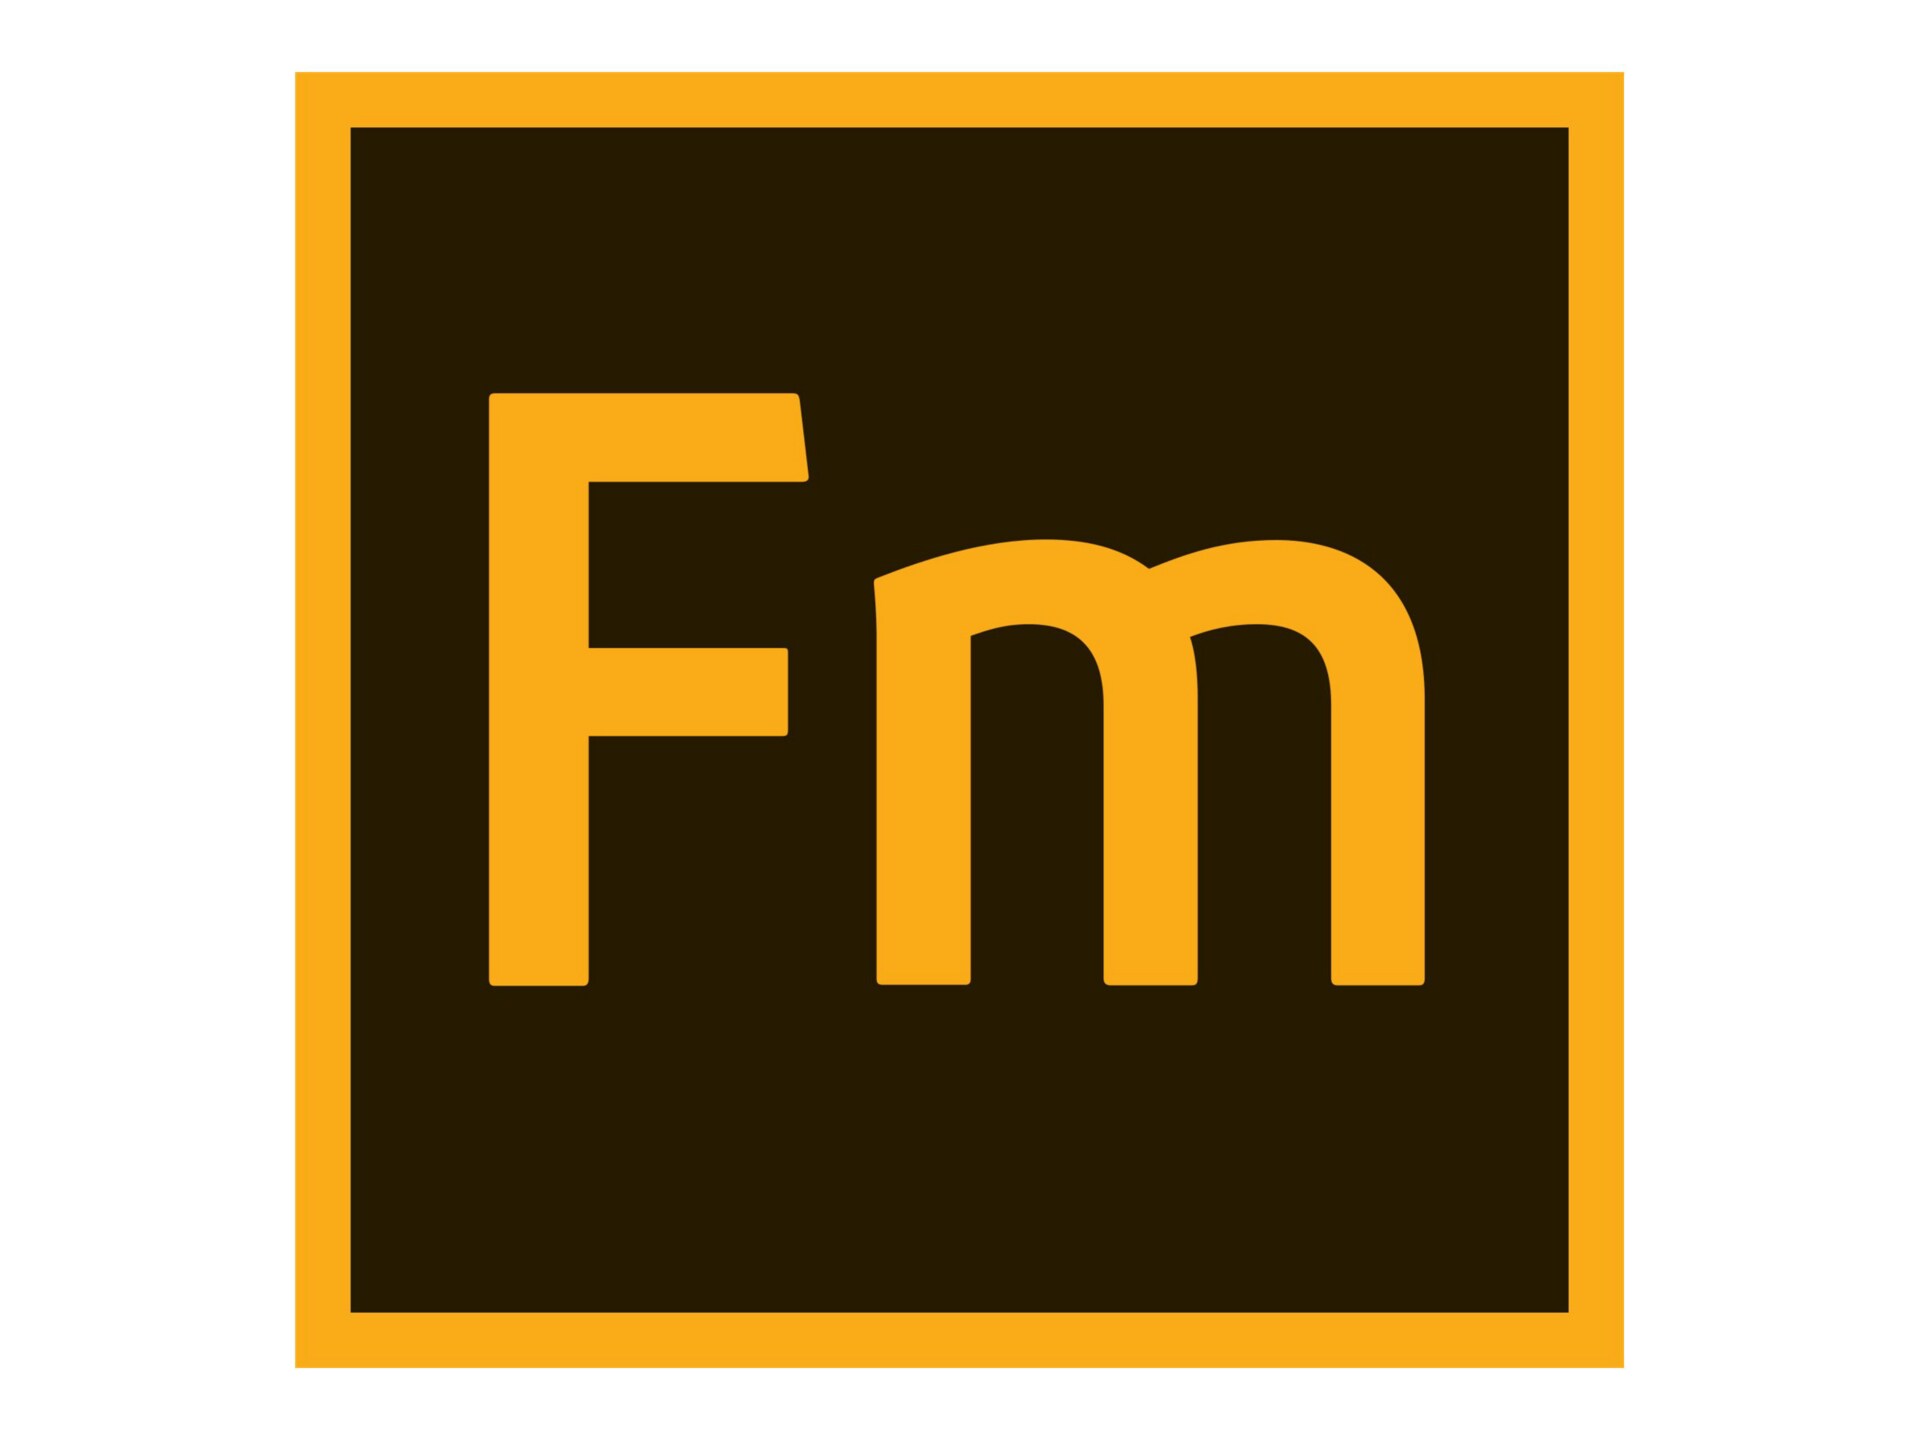 Adobe FrameMaker (2019 Release) - media and documentation set